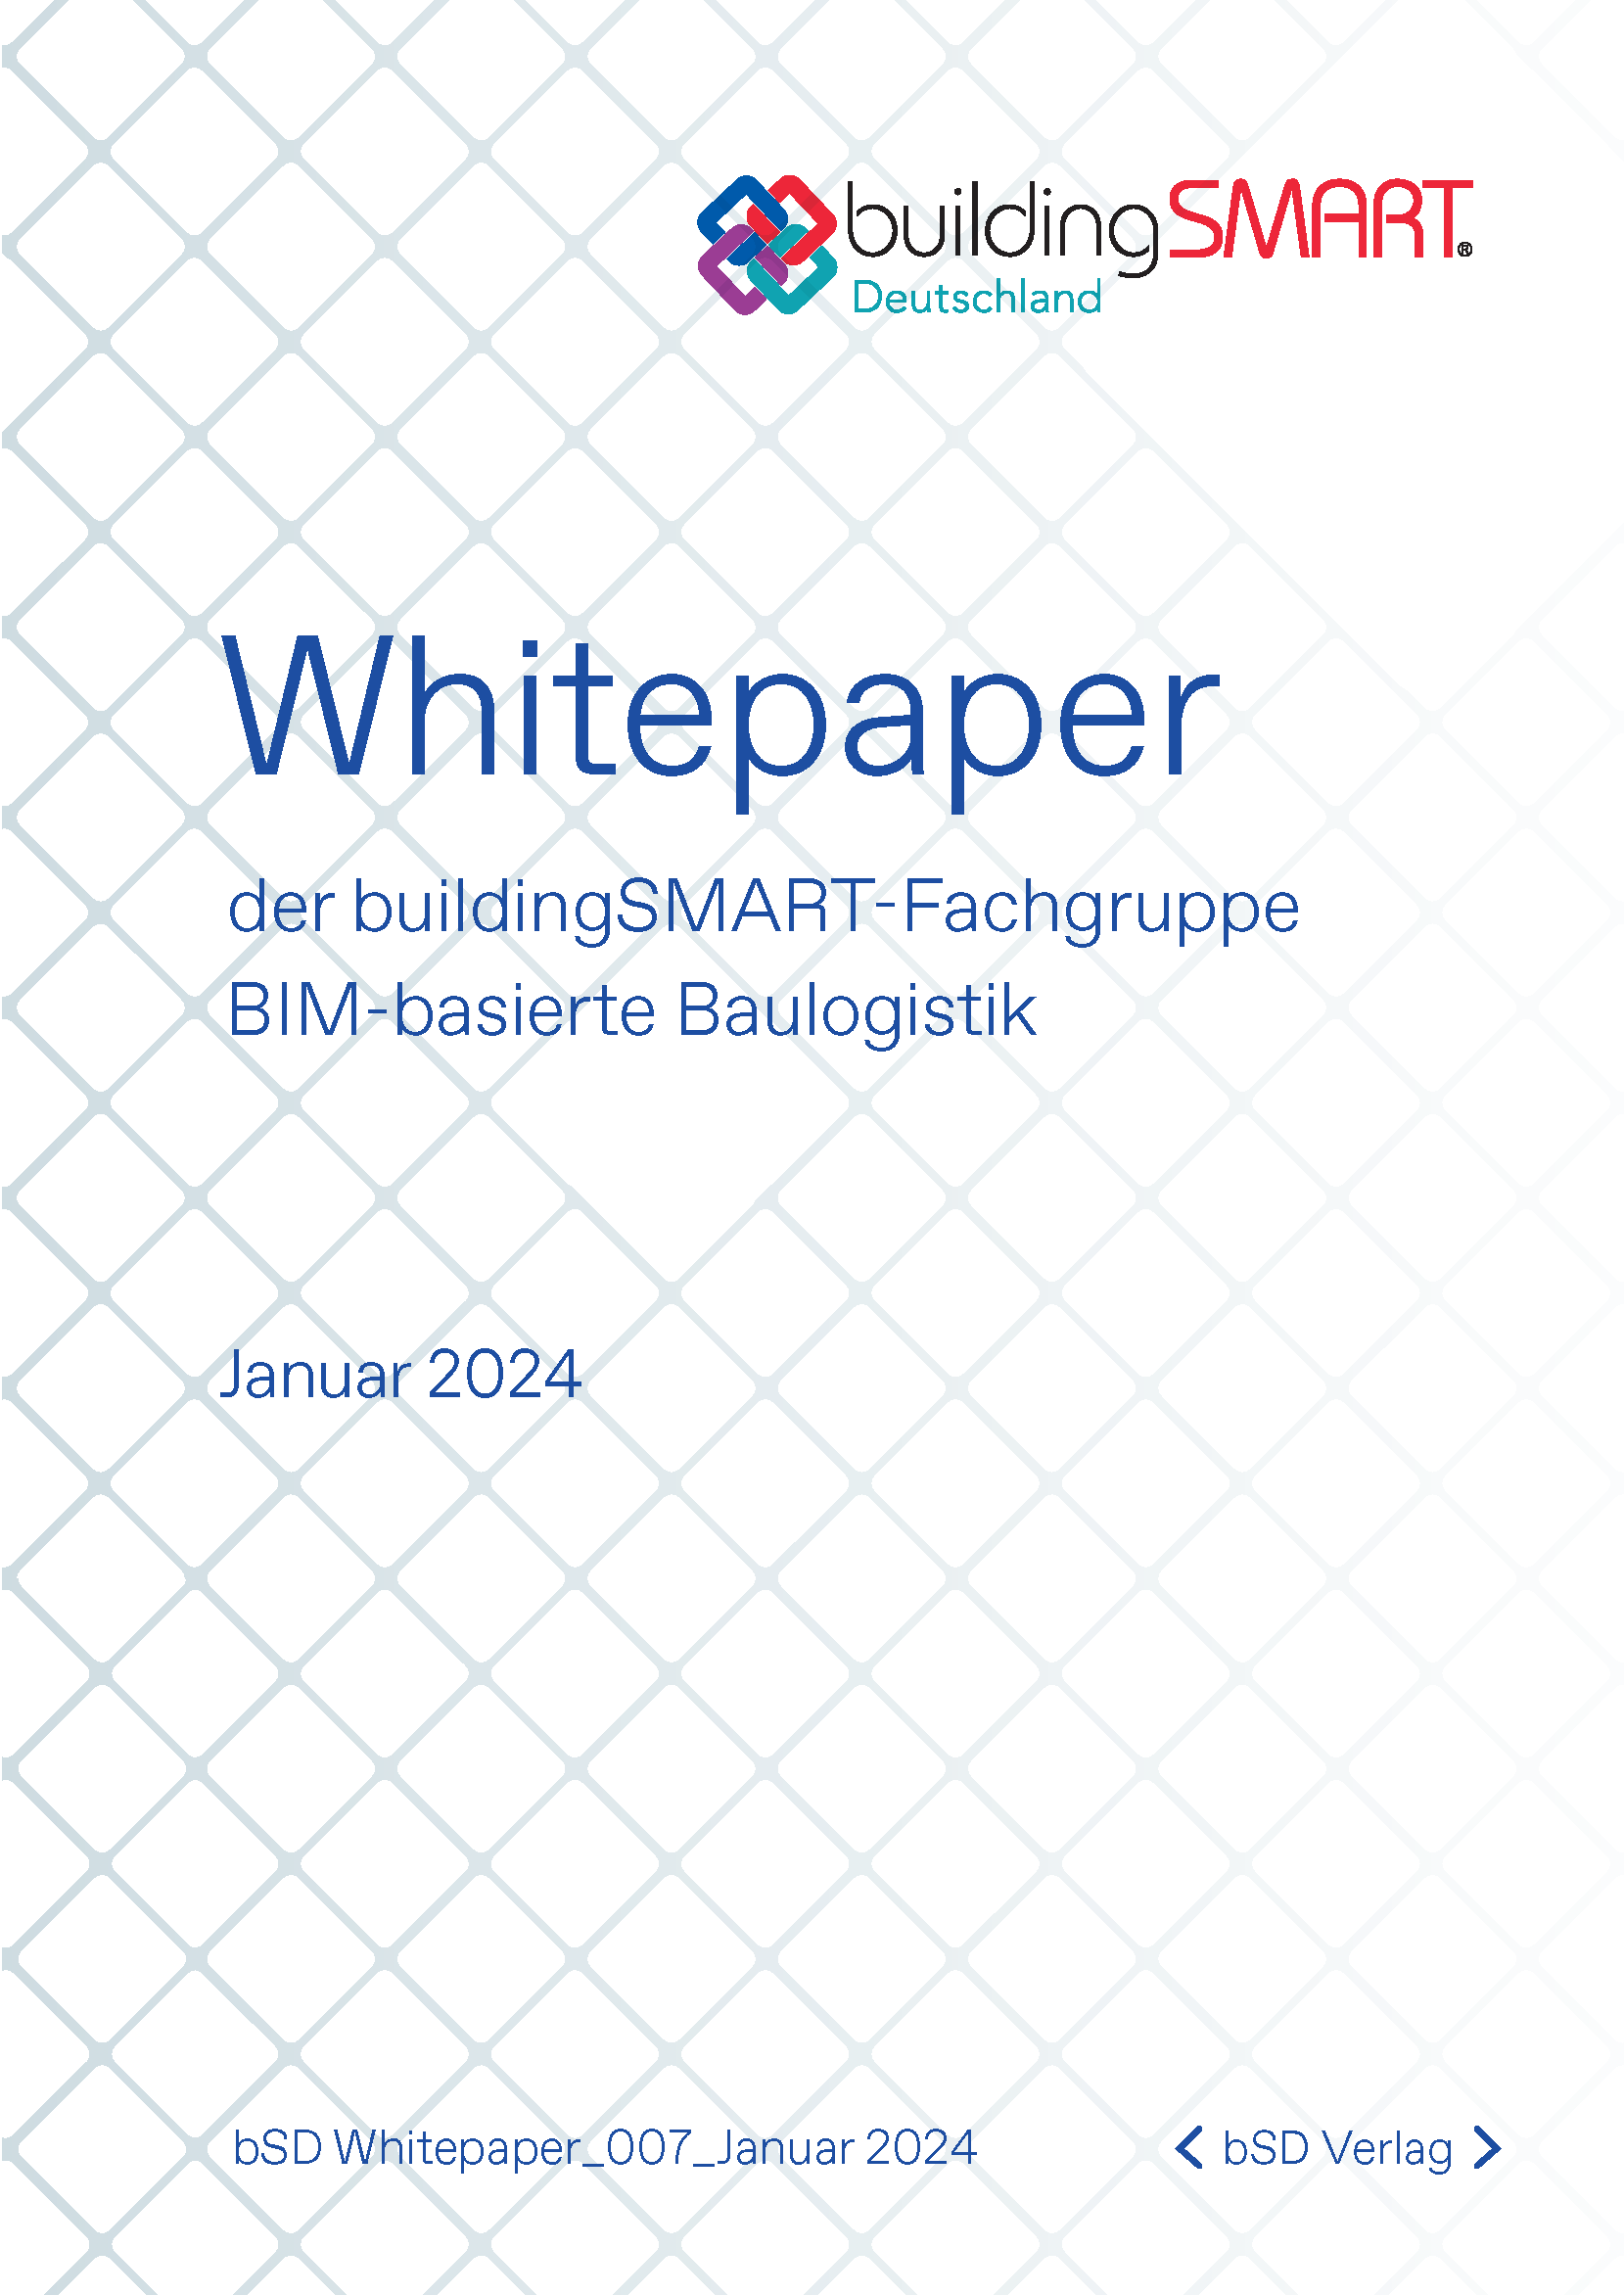 bSD Verlag/bSD Whitepaper BIM-basierte Baulogistik